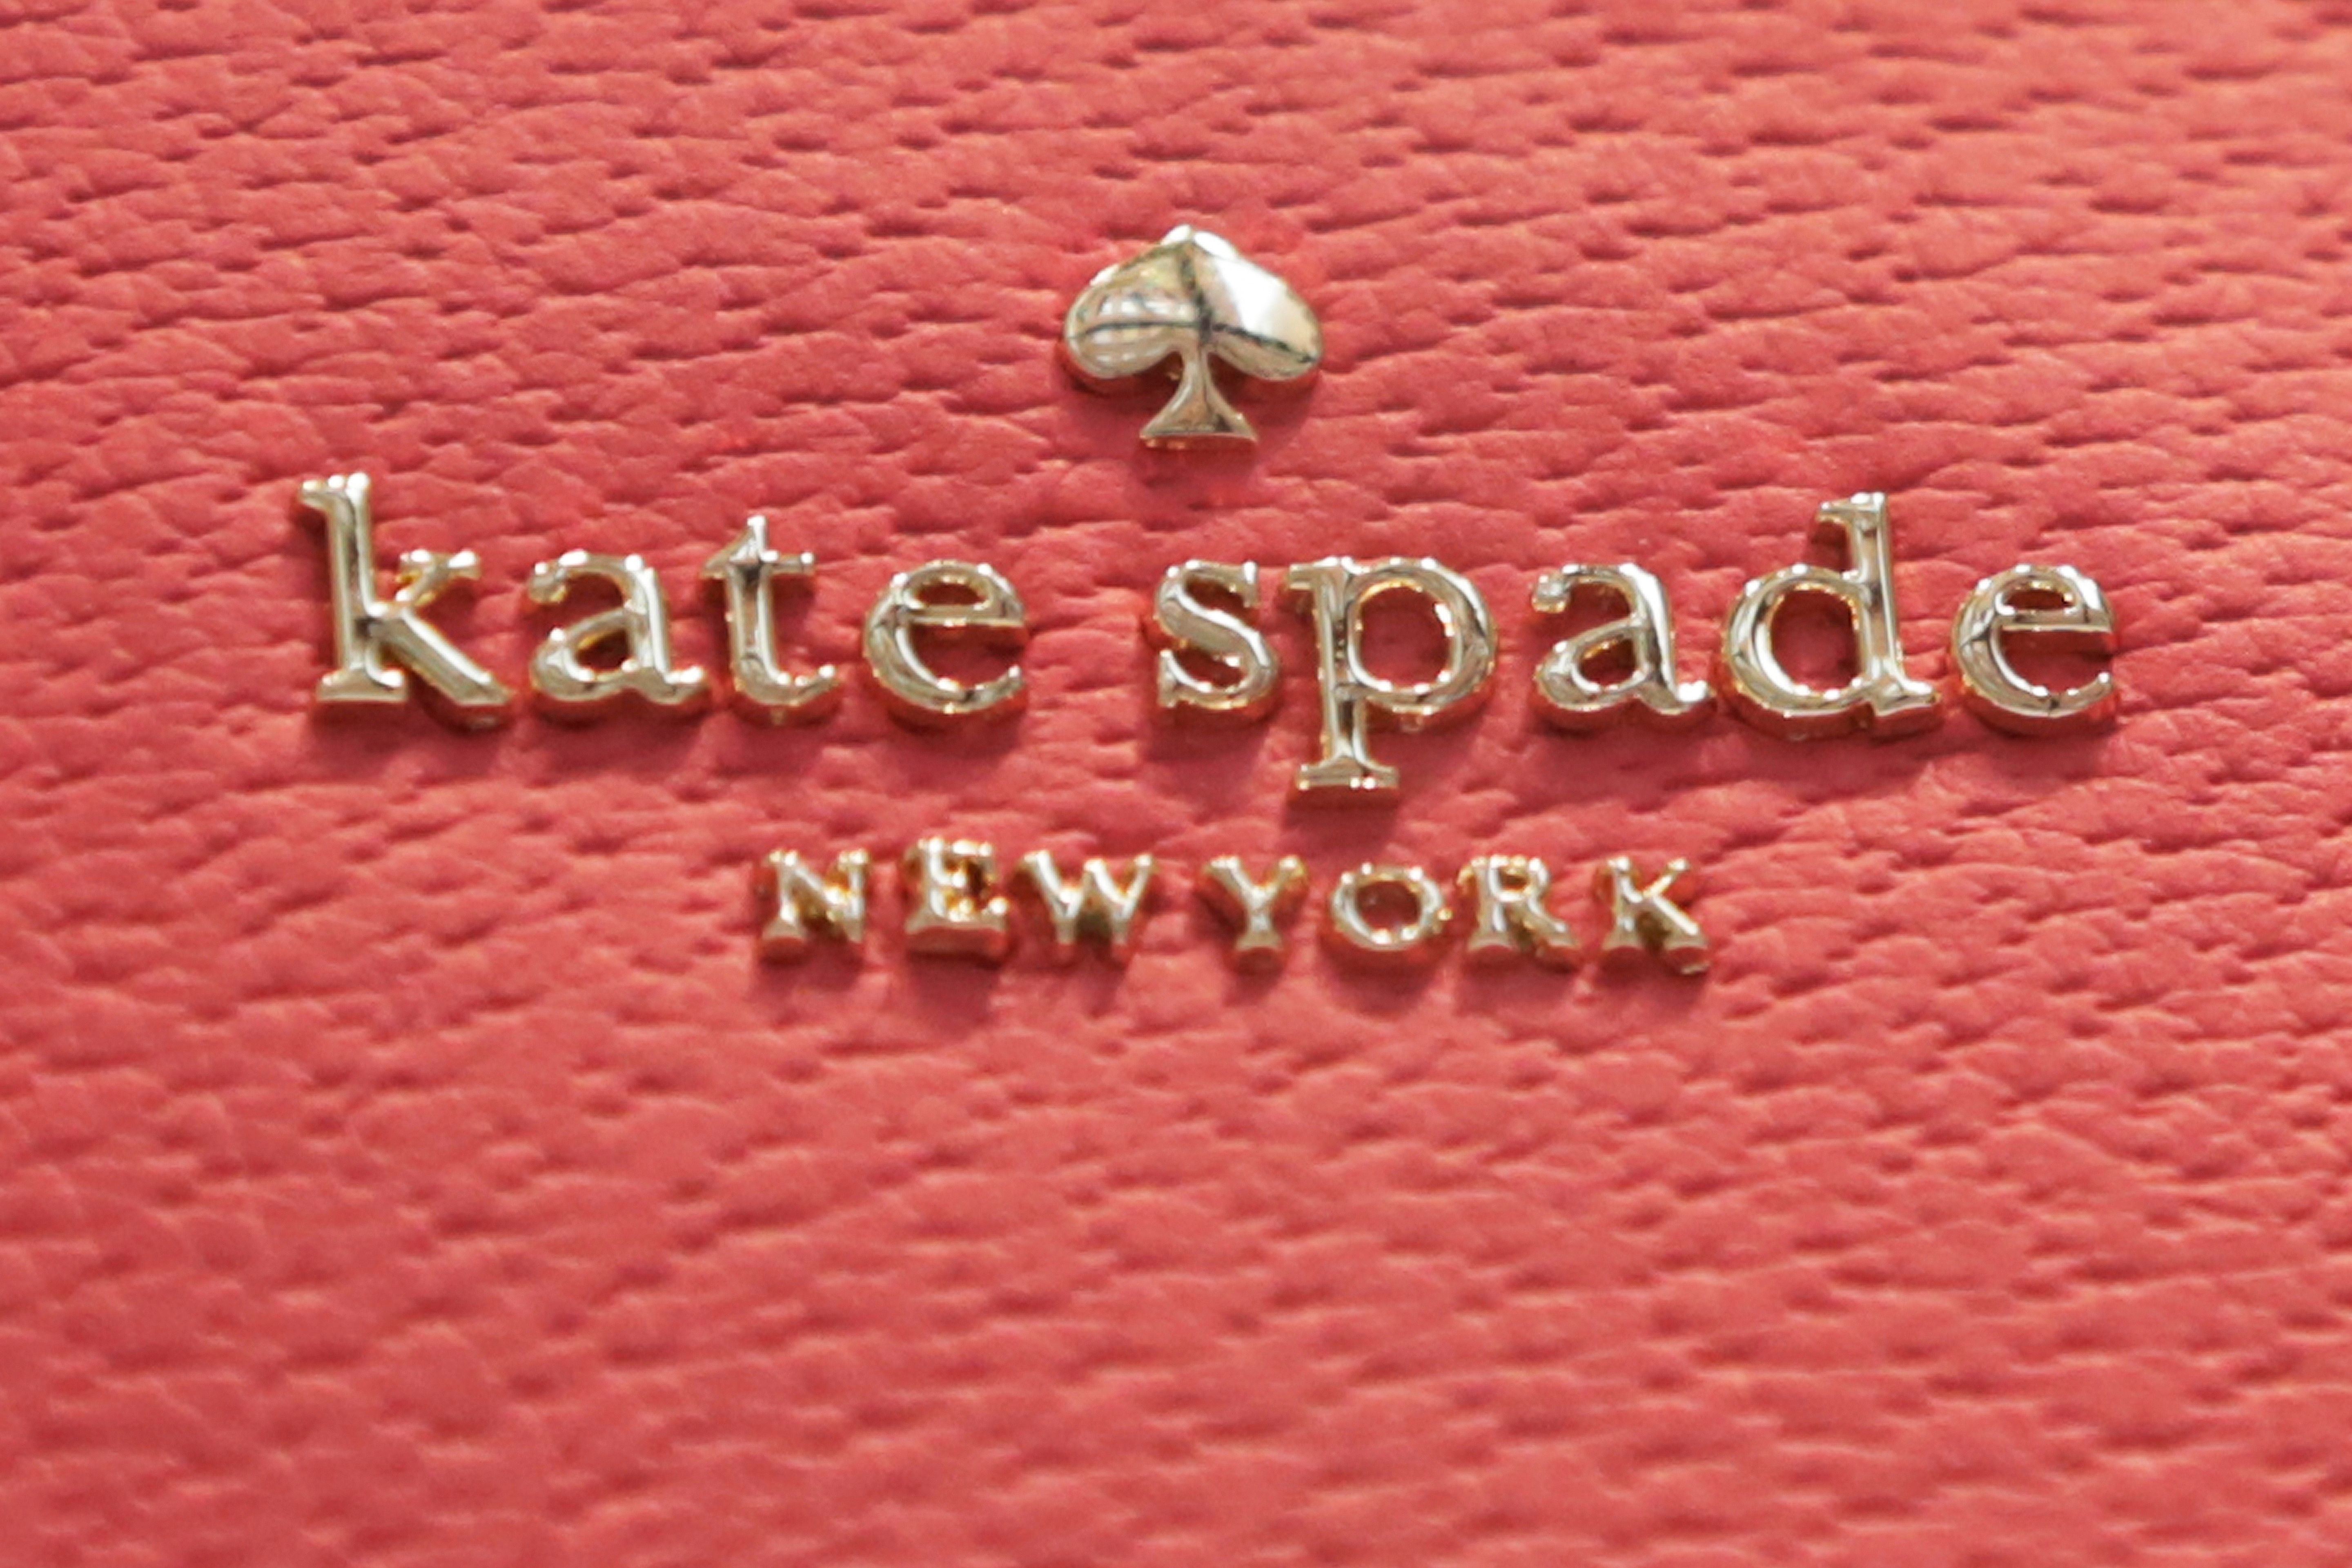 Kate Spade, legendary handbag designer, found dead of suicide